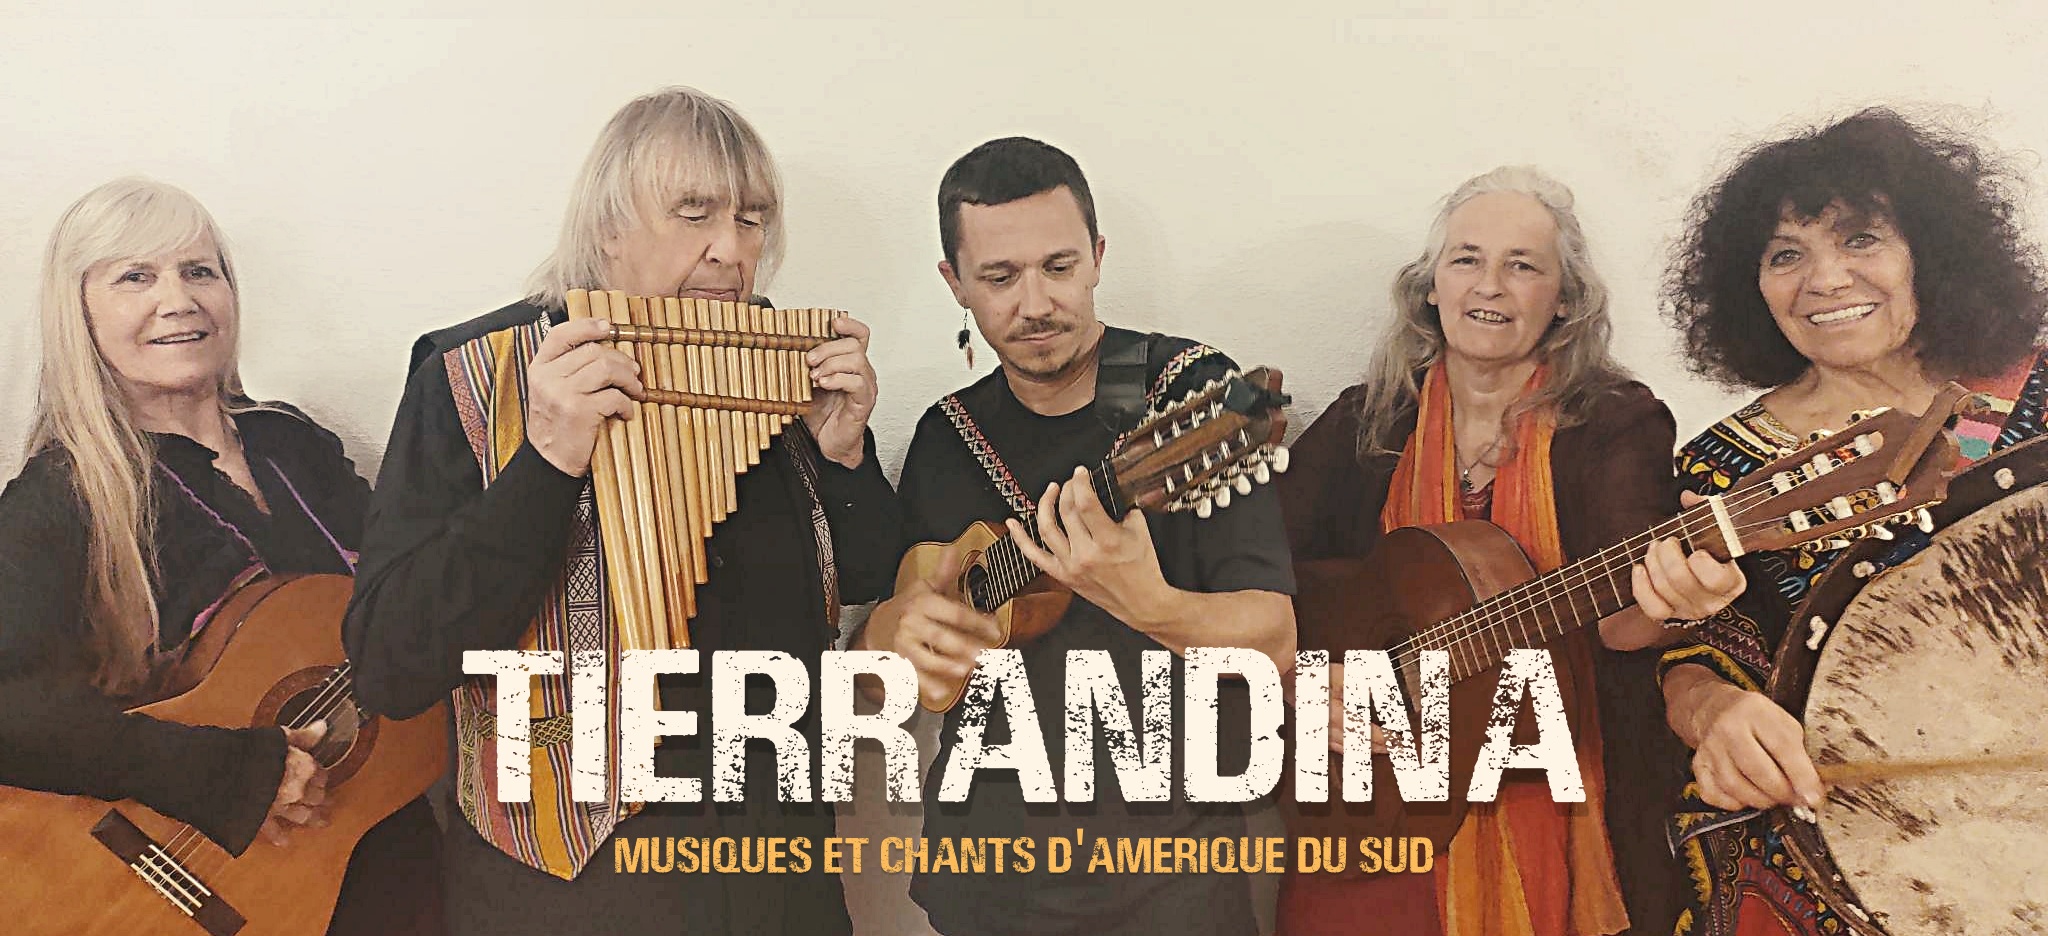 Concert - Samara & Tierrandina